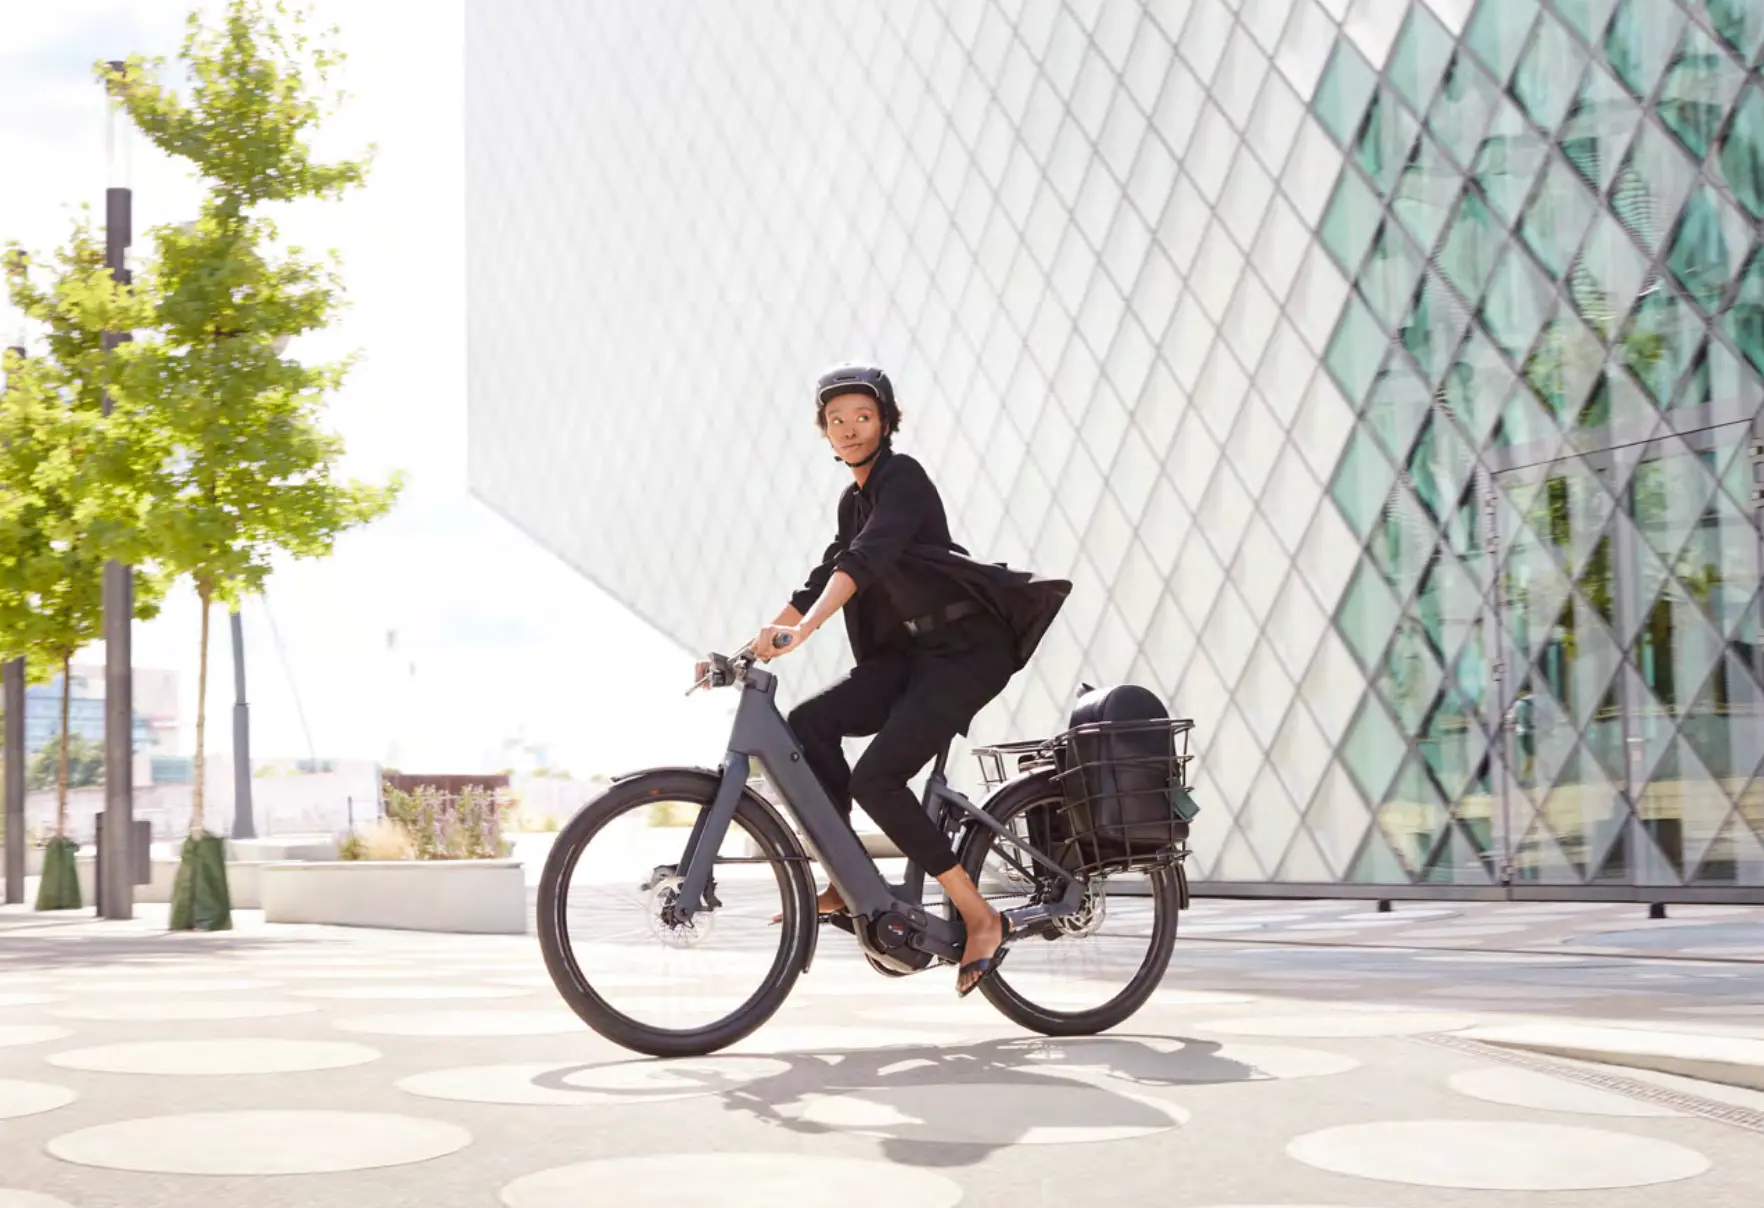 Canyon's Precede:ON e-Urban Bike is Launching in the U.S.